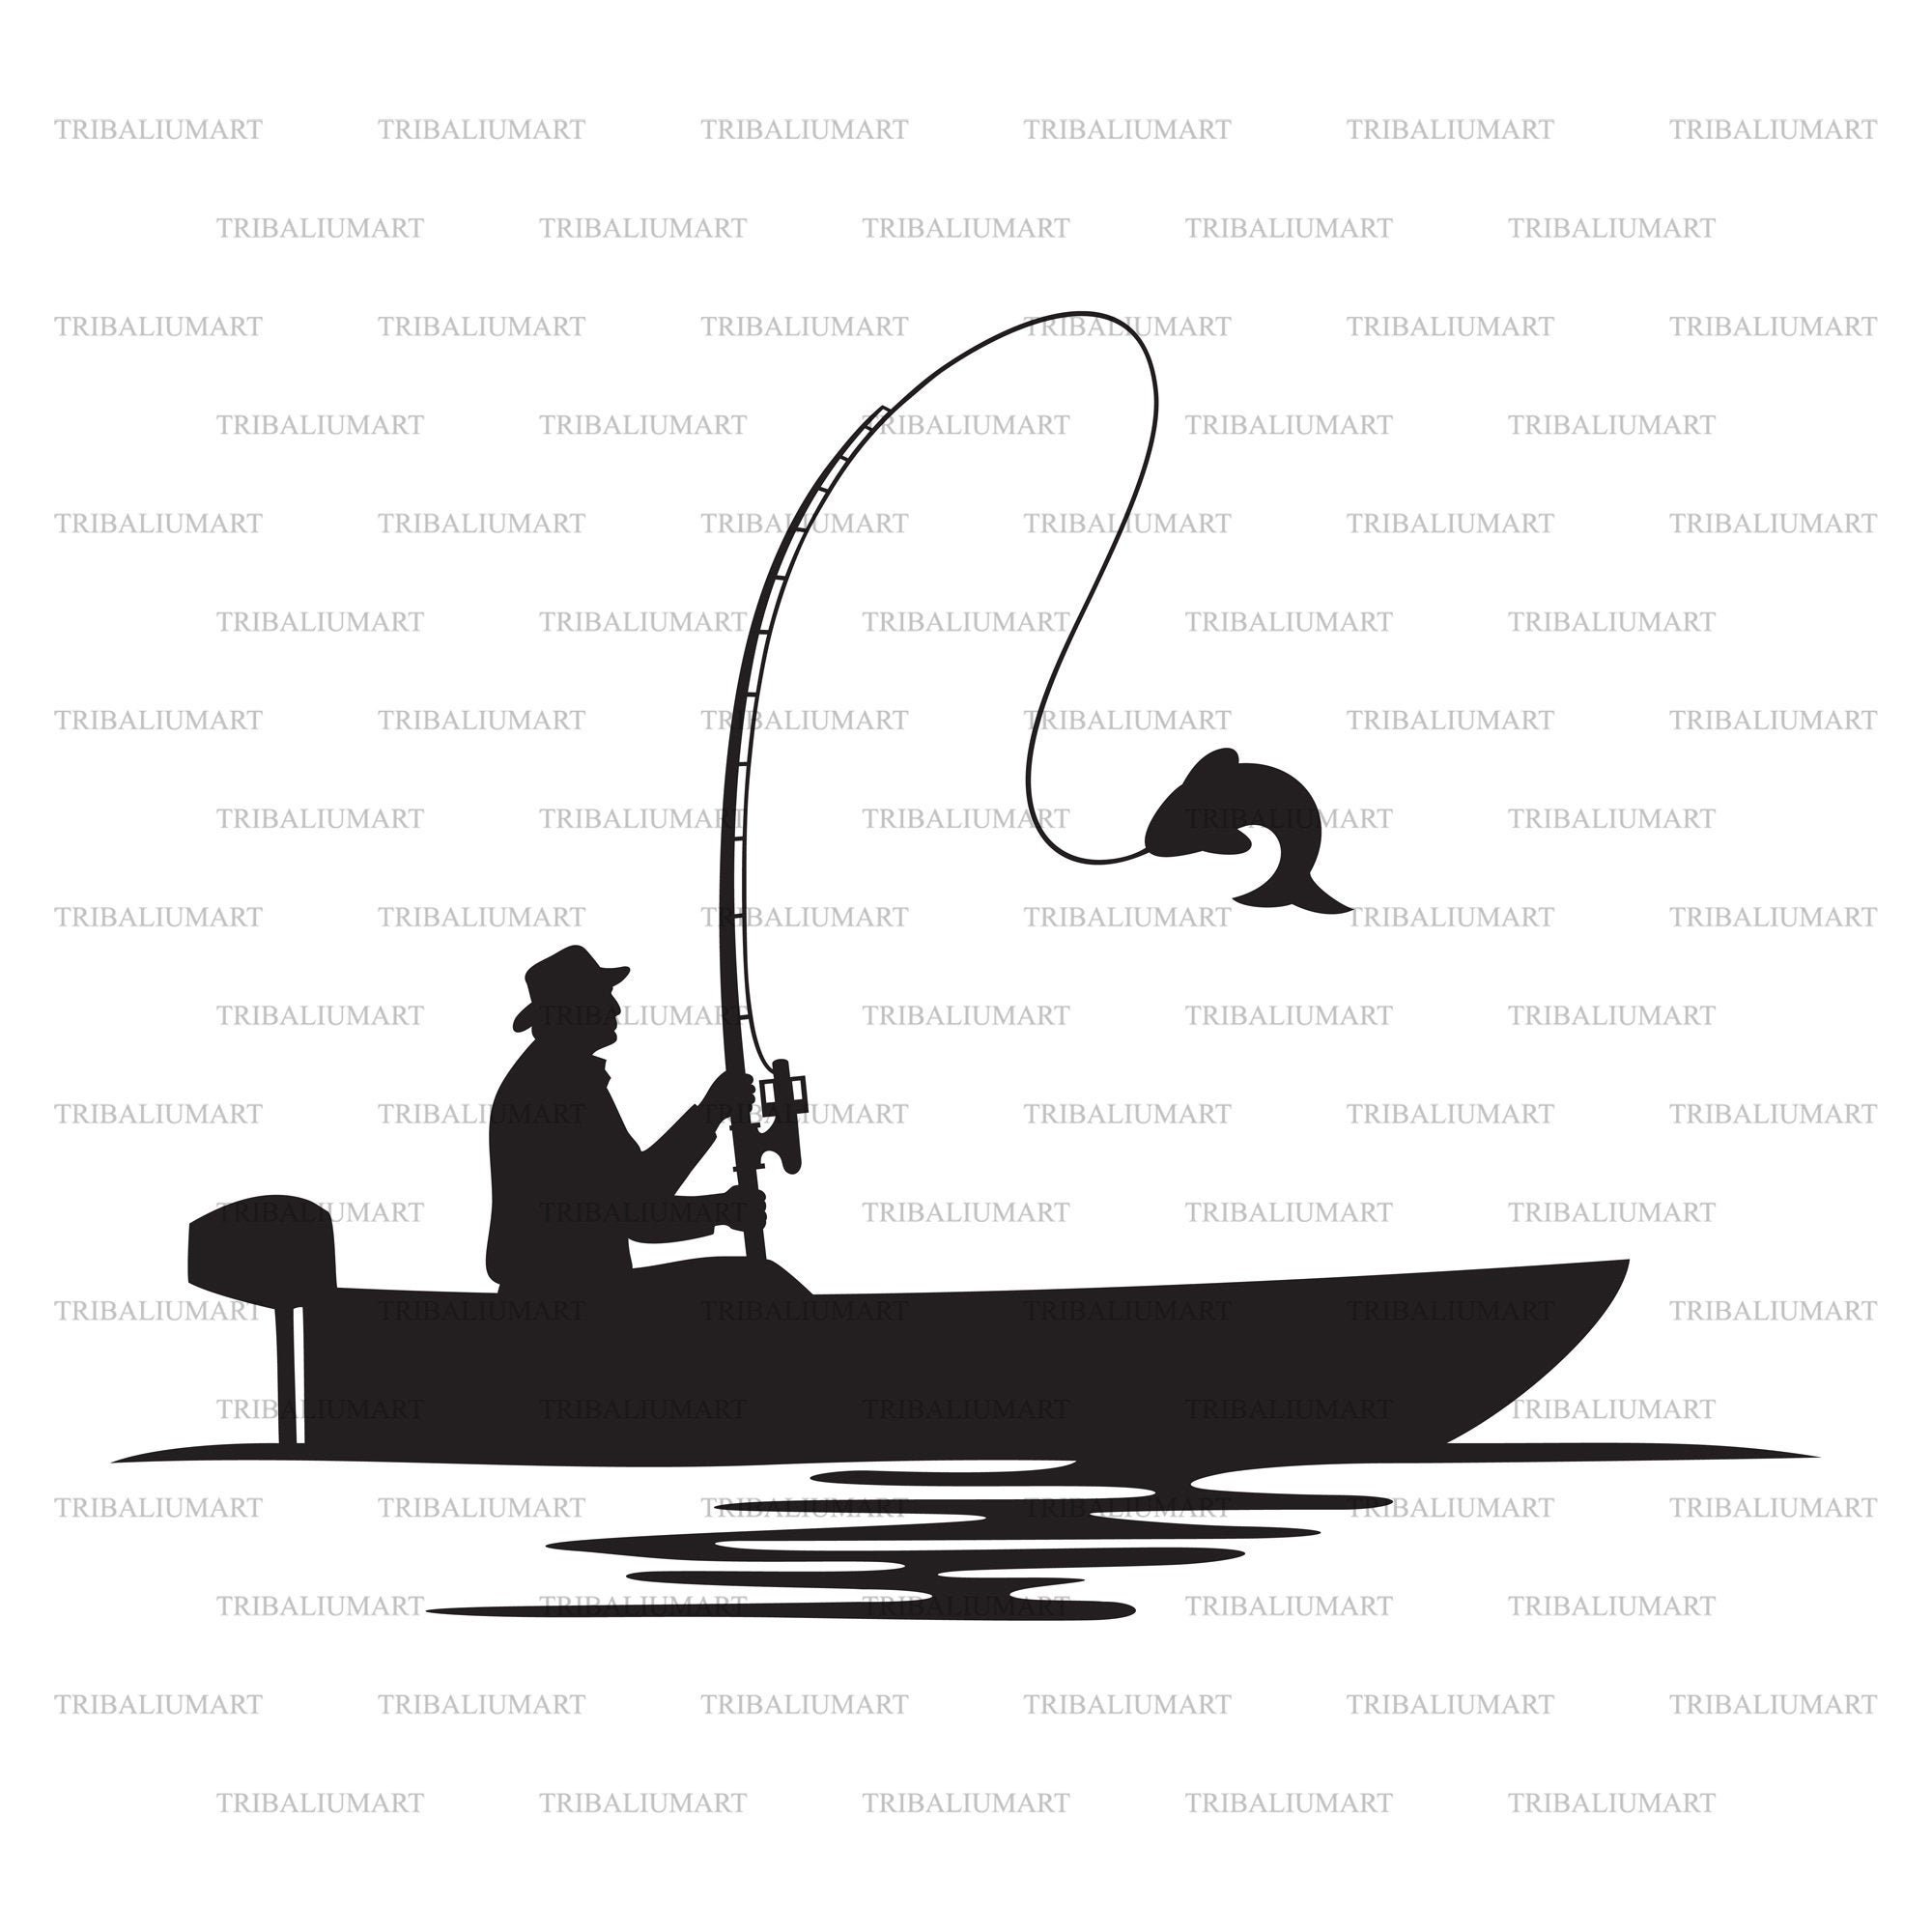 bass fishing boat silhouette